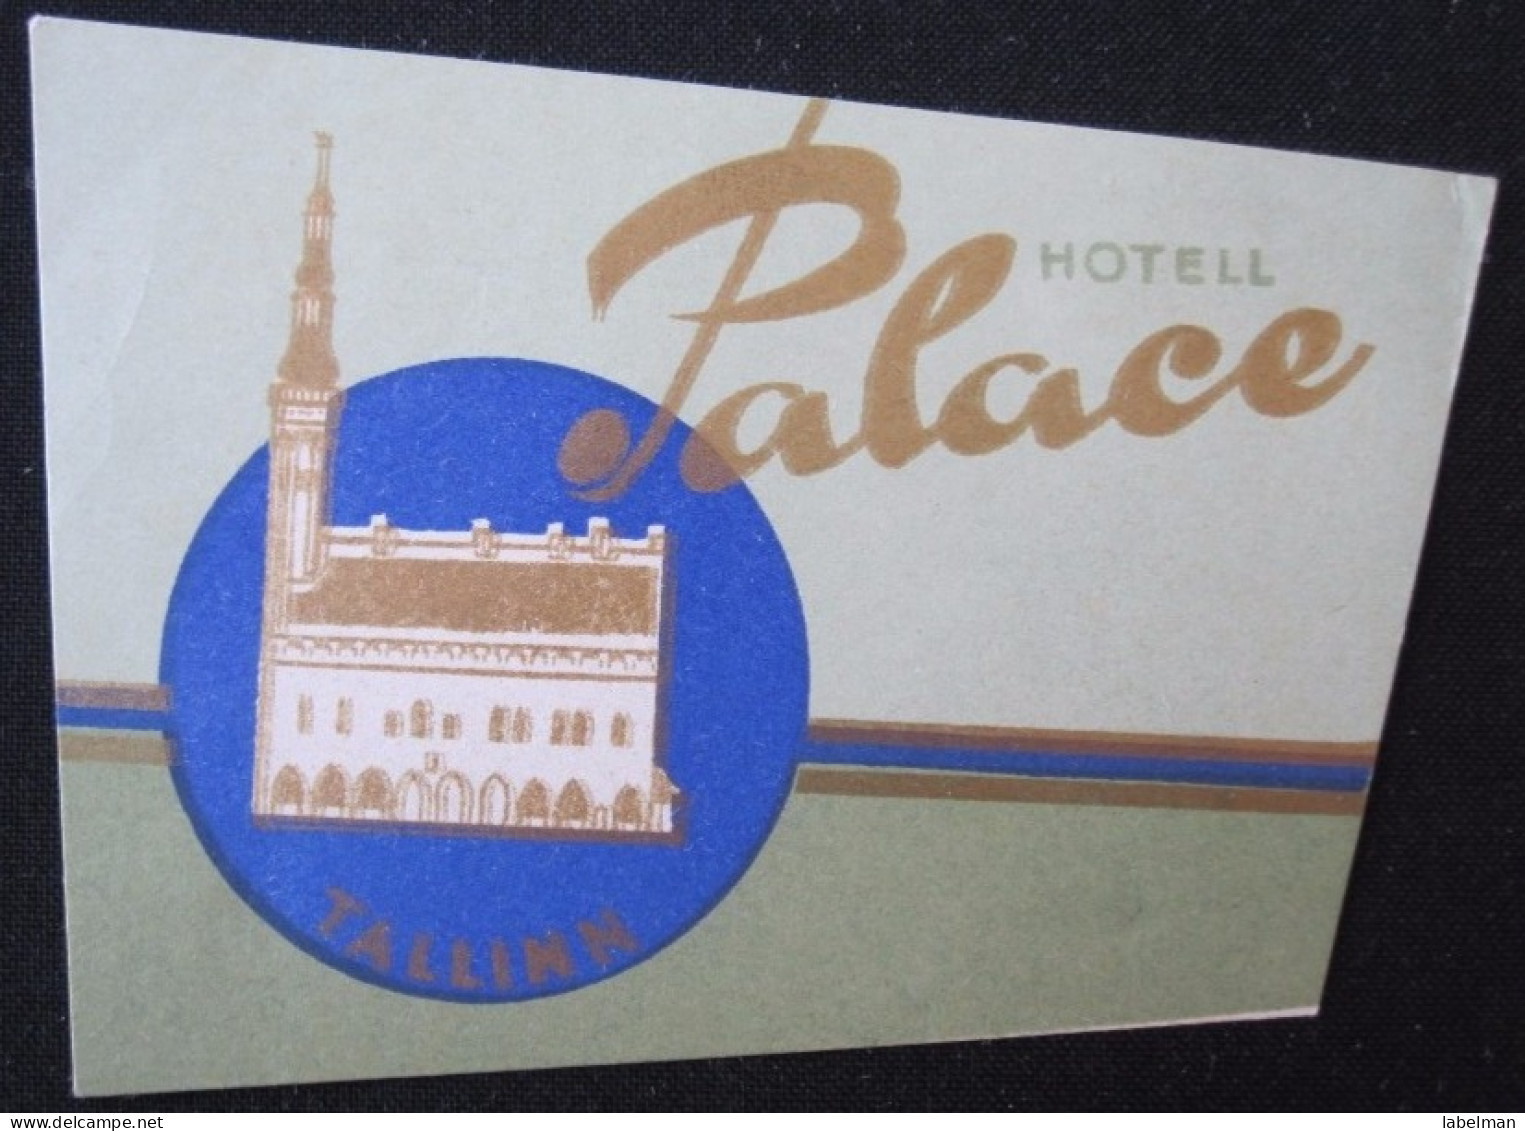 HOTEL CAMPING INN DECAL PALACE TALLINN ESTONIA ASTONIA USSR RUSSIA LUGGAGE LABEL ETIQUETTE AUFKLEBER DECAL STICKER - Hotel Labels